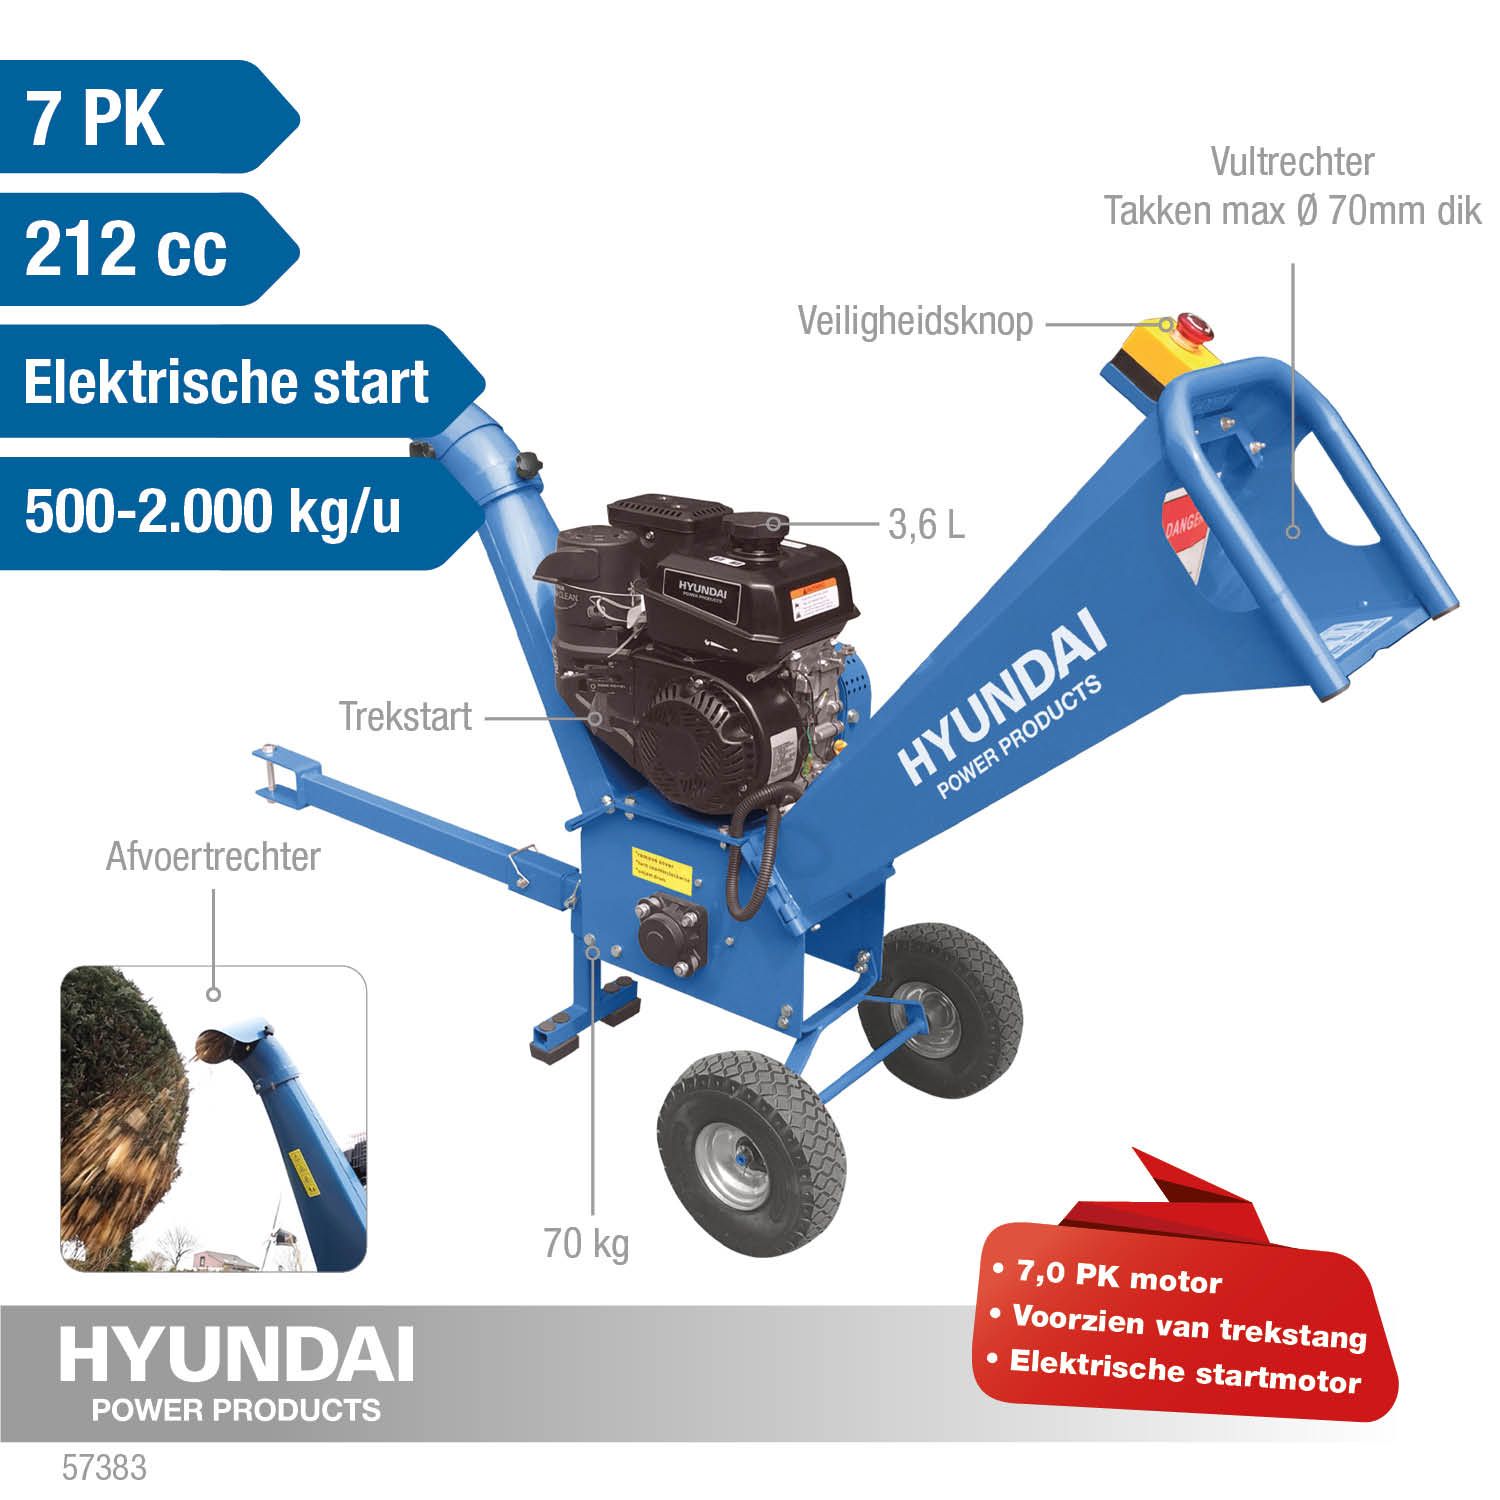 Hyundai Hakselaar 7pk 212cc - Elek. start